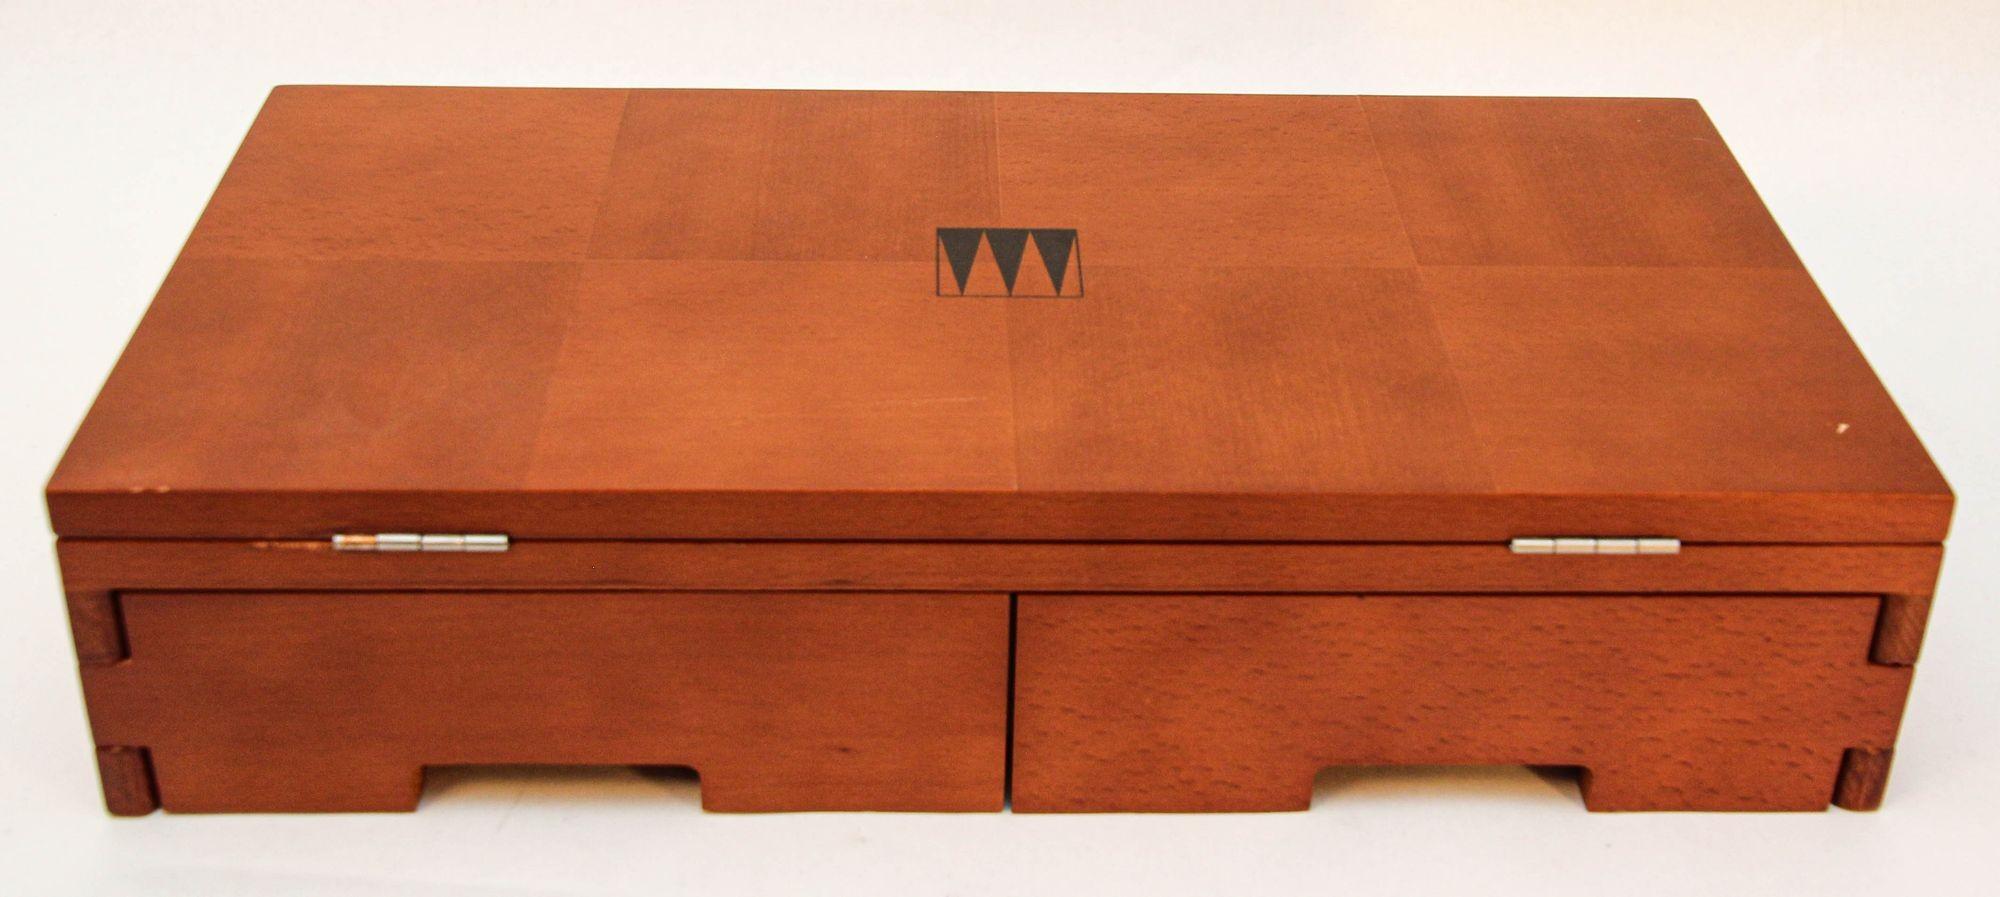 Michael Graves Postmodern Backgammon Set Vintage Game Box 3